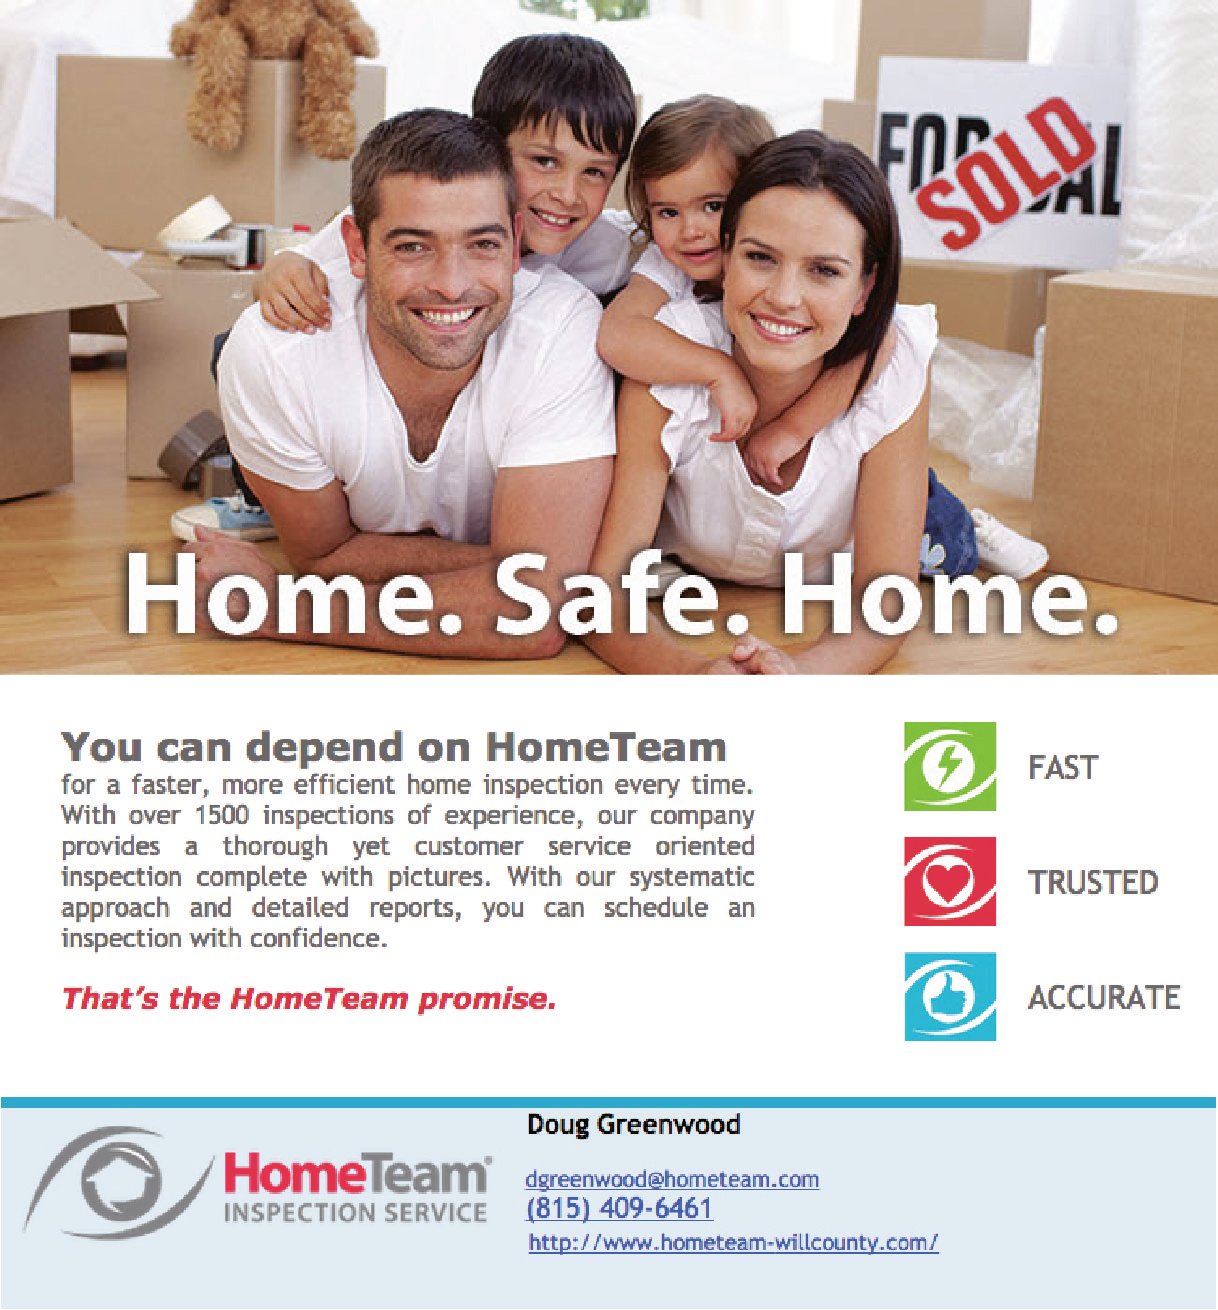 Home Team Inspection Service Logo